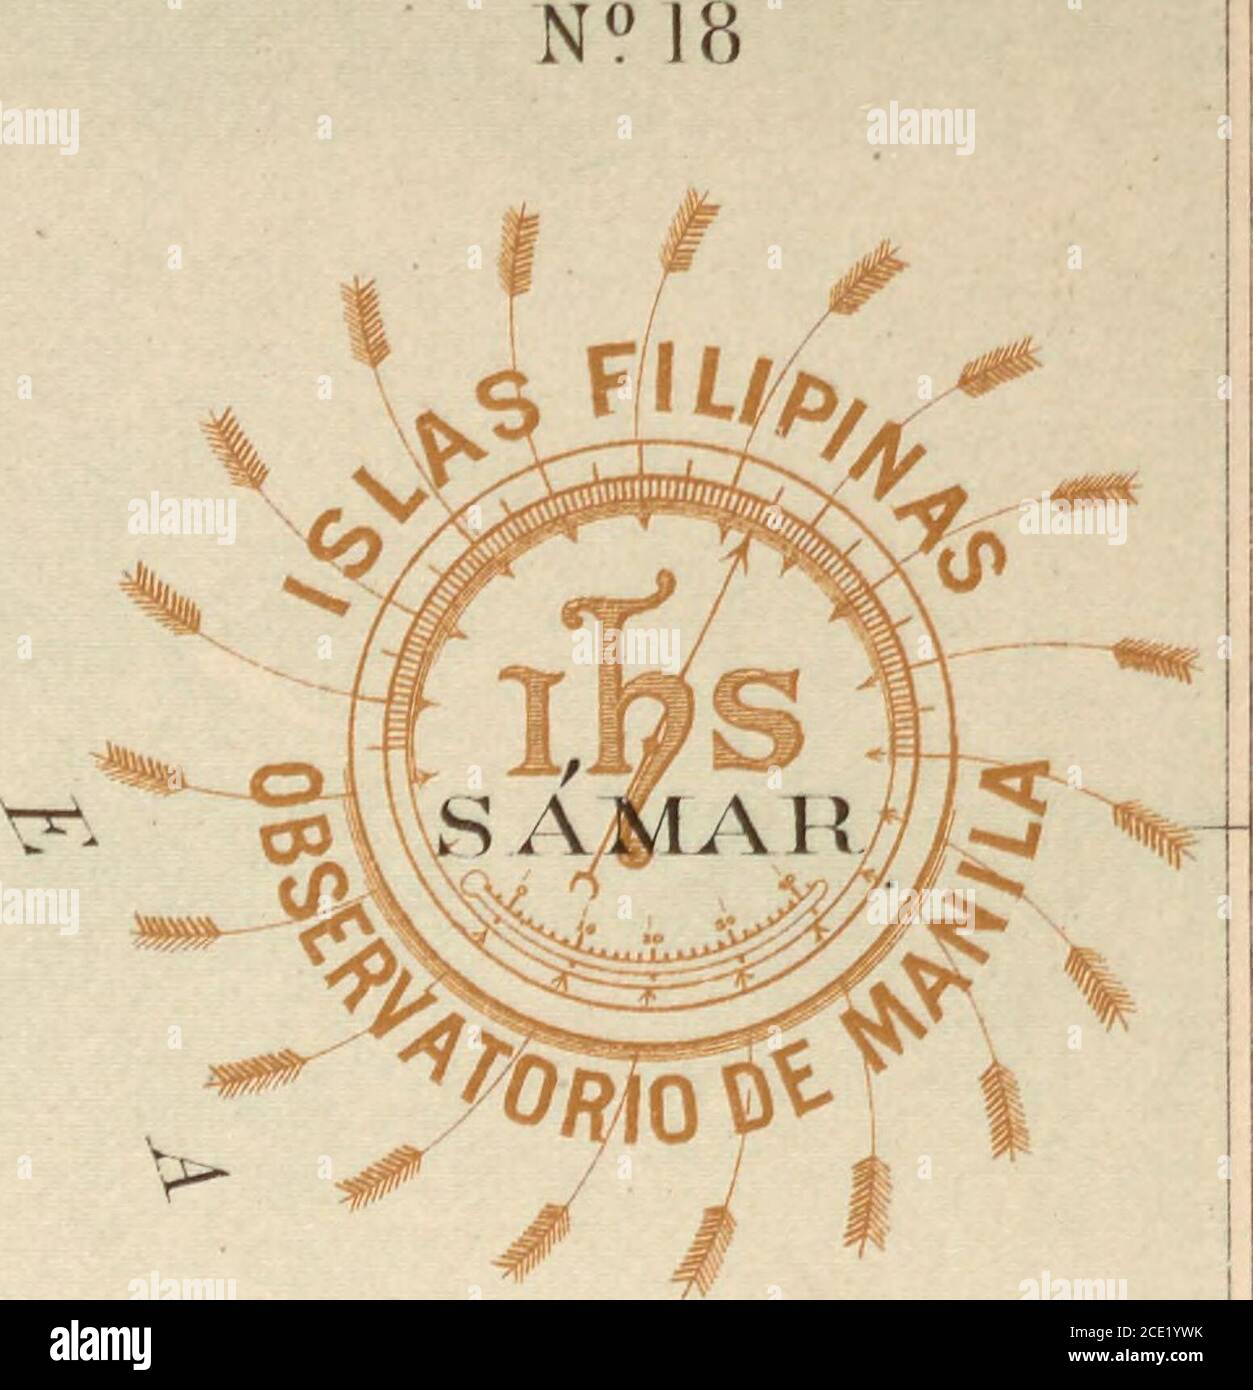 . Atlas of the Philippine Islands . .W /CaíaTÍnn.. .; J V„m I mu/in 11/, Hihto iK/imibiti/ii h,l,l,UH.. C? del Espíritu Santo°y,Uiunb.u, M.Pamangpan^án , ,-? P*^ Man^ud^ MBoboyj Vu-iato r,P.a Maglalabon yulaoi I) a J--^ r MaMi.u,,,- ^^l p. fli/U-. o Of/H,//H.„., rÁ ^ tti/,iiii/i o¡r„&lt;:„;„i I Hum III/, /v. ?./Mil ?ii&lt; --l/iniiiiiili. M.Tolay ^^iffvniikS I uixituim ^ ^ MSigarag ° M.Catarman Salté Sanglejfo o /.op/ lU Xeipt S. Hicriiui T,/nuibu,-,4i, cJMillliiiH/i/ |^•^h-.^.^s•| Mpsa de Palapag, {milhuillín ^ P.aSilá t Tatangbang jJiT/UlllJUi/l ,,4^¡ FiU({iutl- :•:/ ?^.   (7 PaPagsanhán. M. Stock Photo